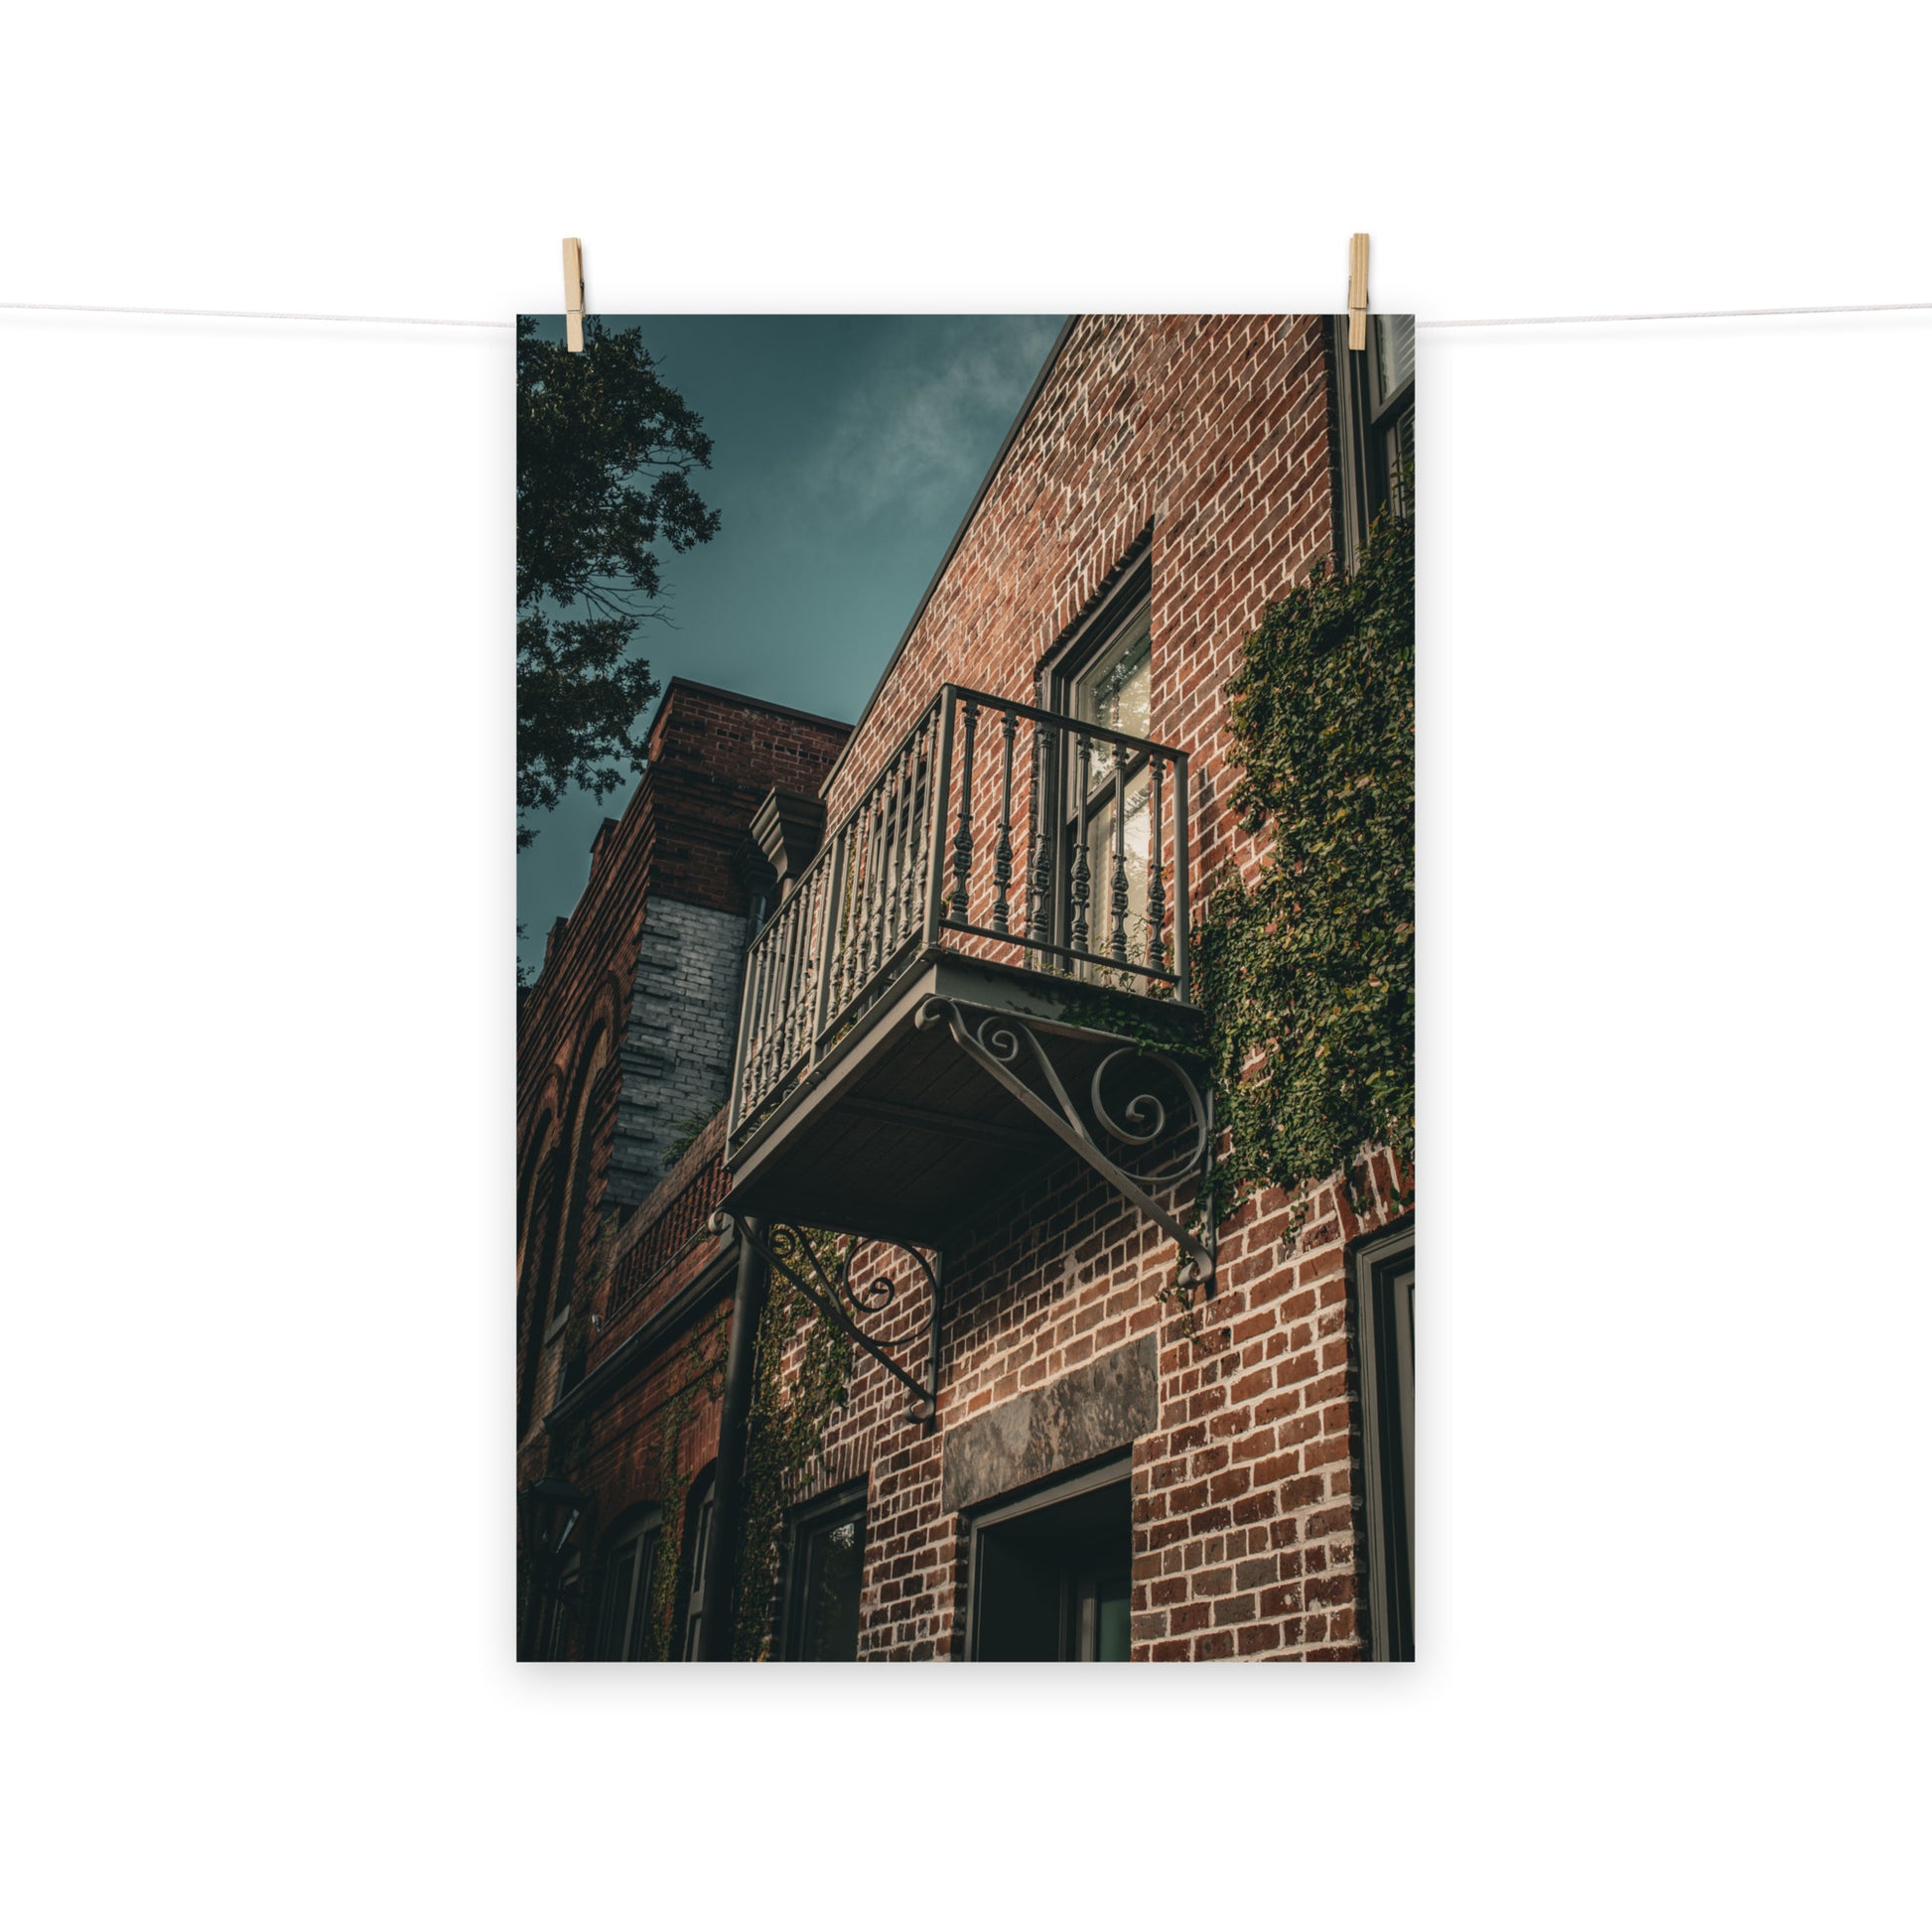 Architectural / Industrial / Cityscape Abstract Decor Old Iron Balcony Savannah Ga 3 Loose Wall Art Print 8" x 10"